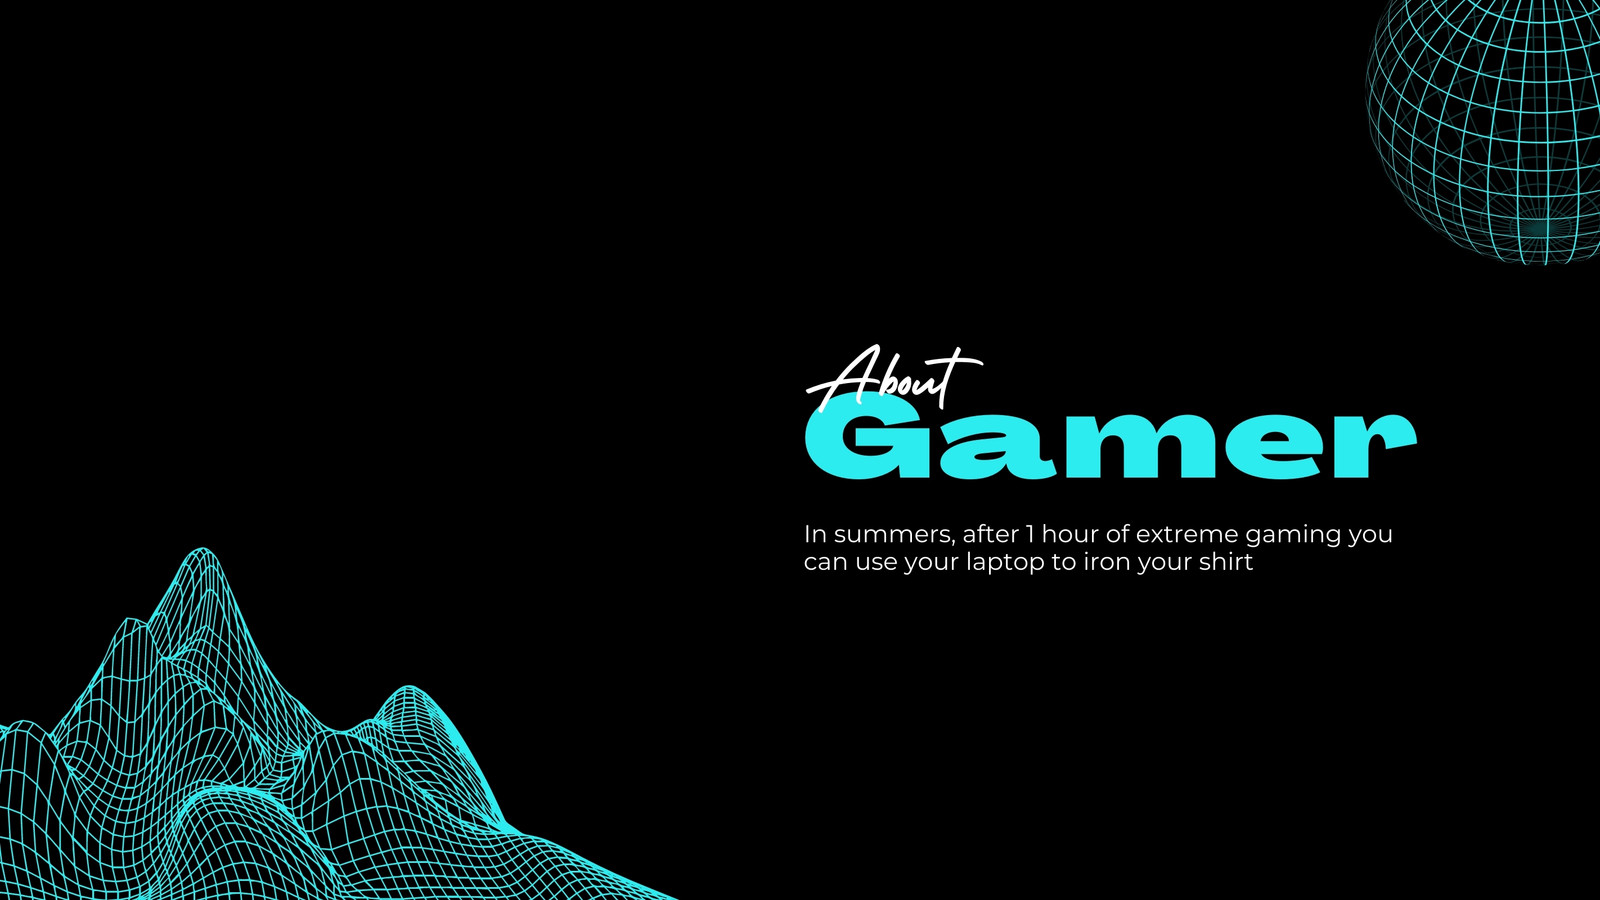 Free customizable gaming desktop wallpaper templates | Canva